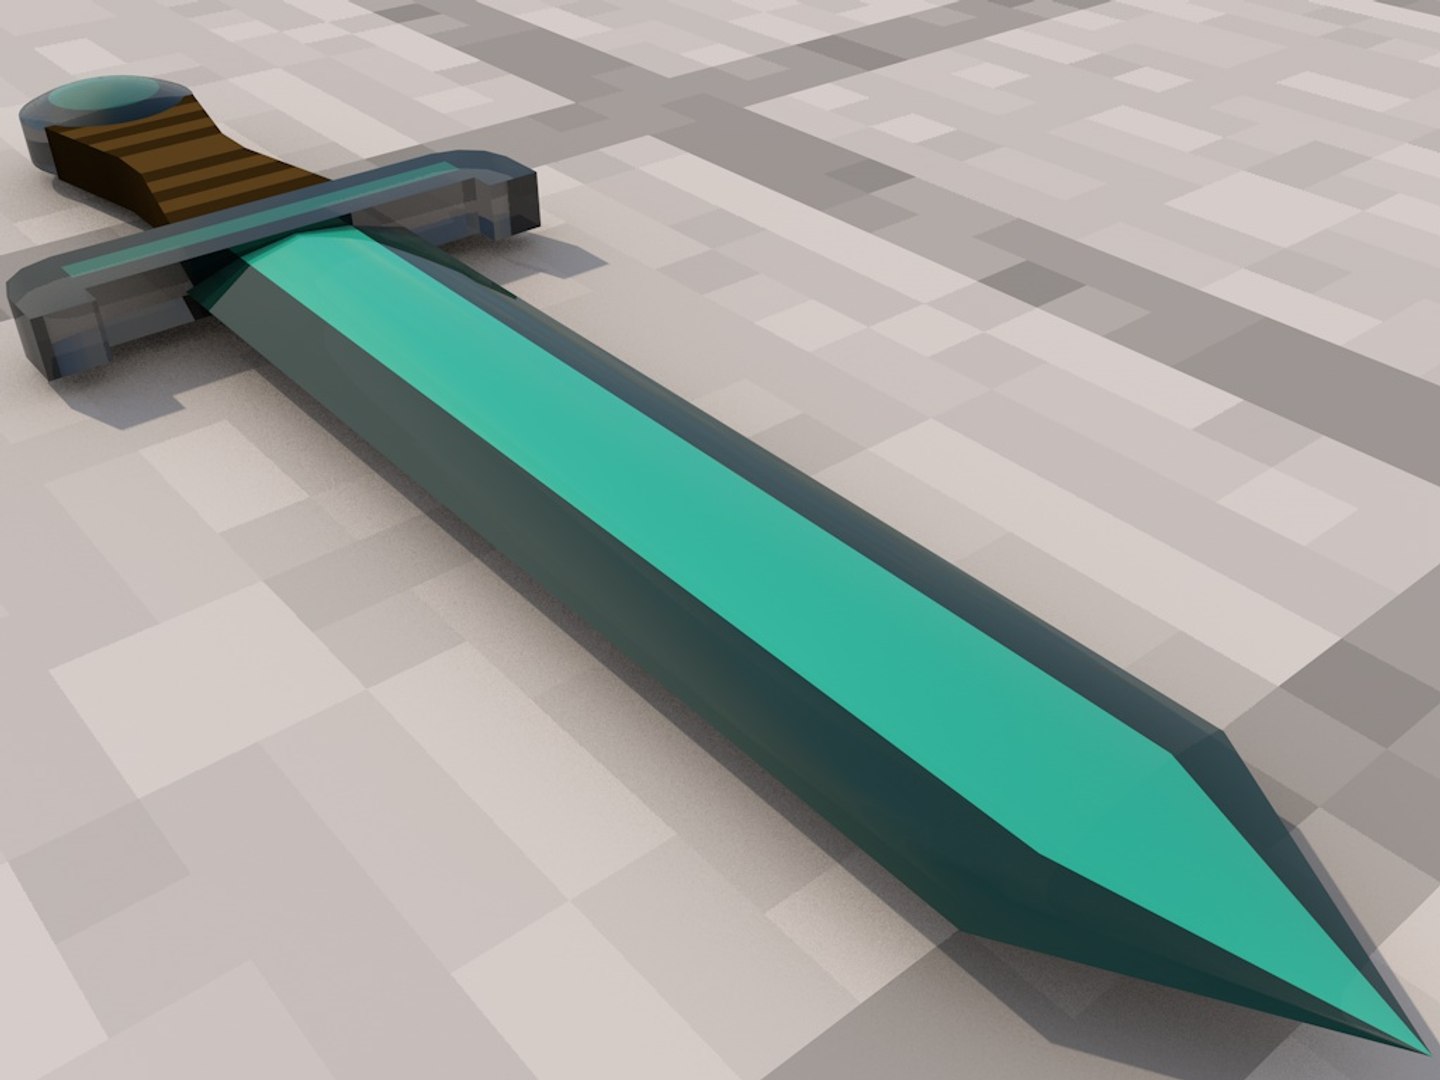 minecraft real life diamond sword